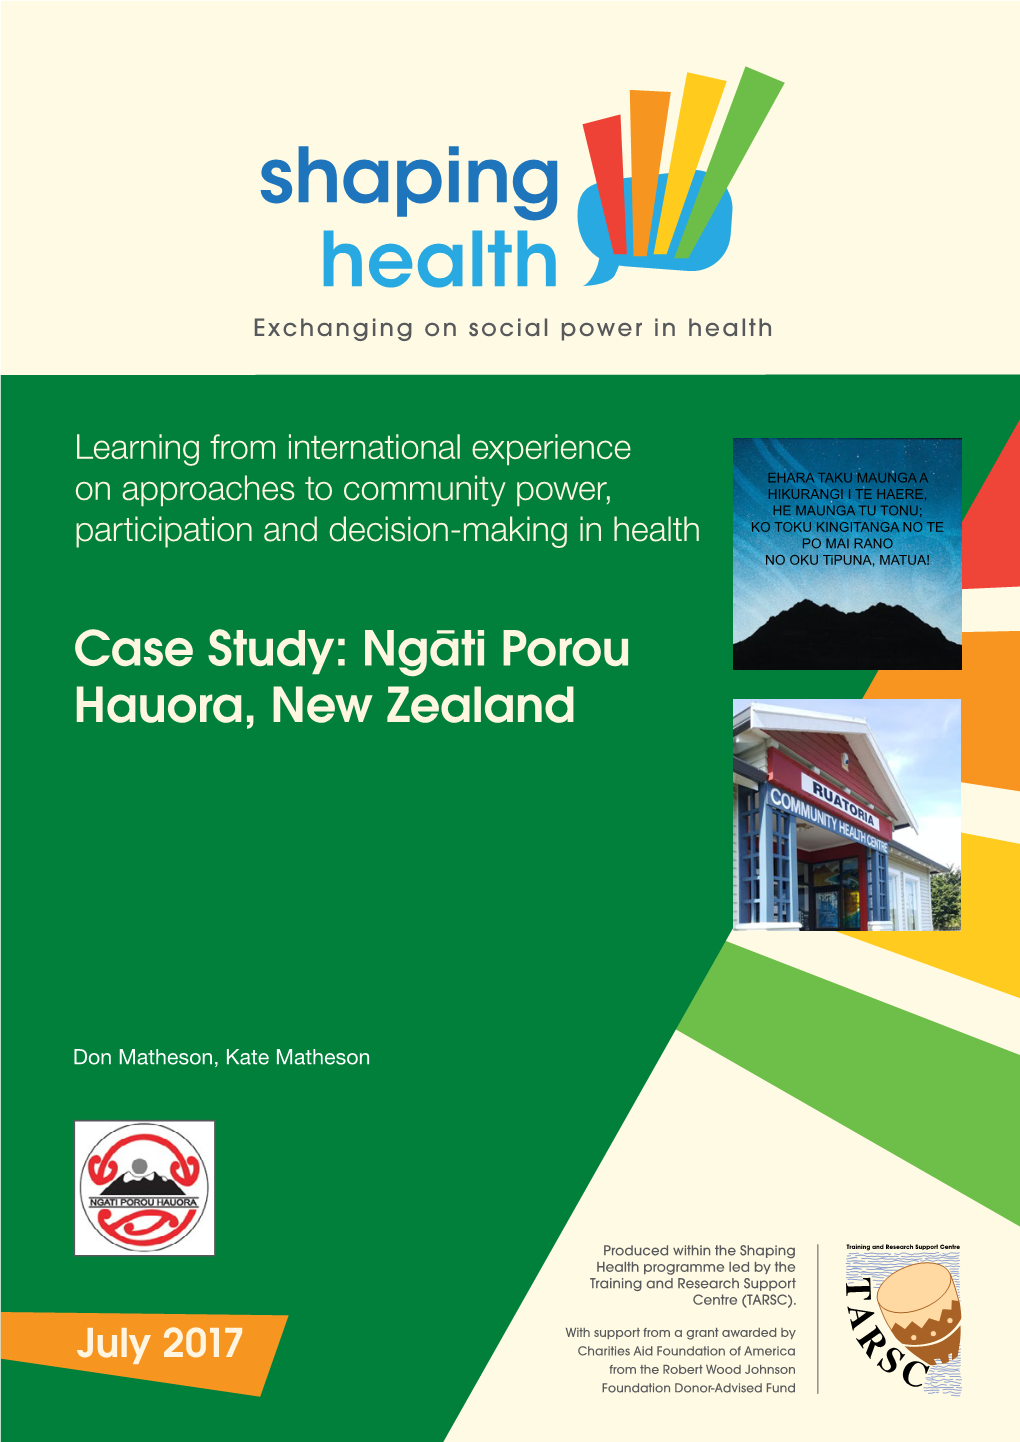 Case Study: Ngati Porou Hauora, New Zealand